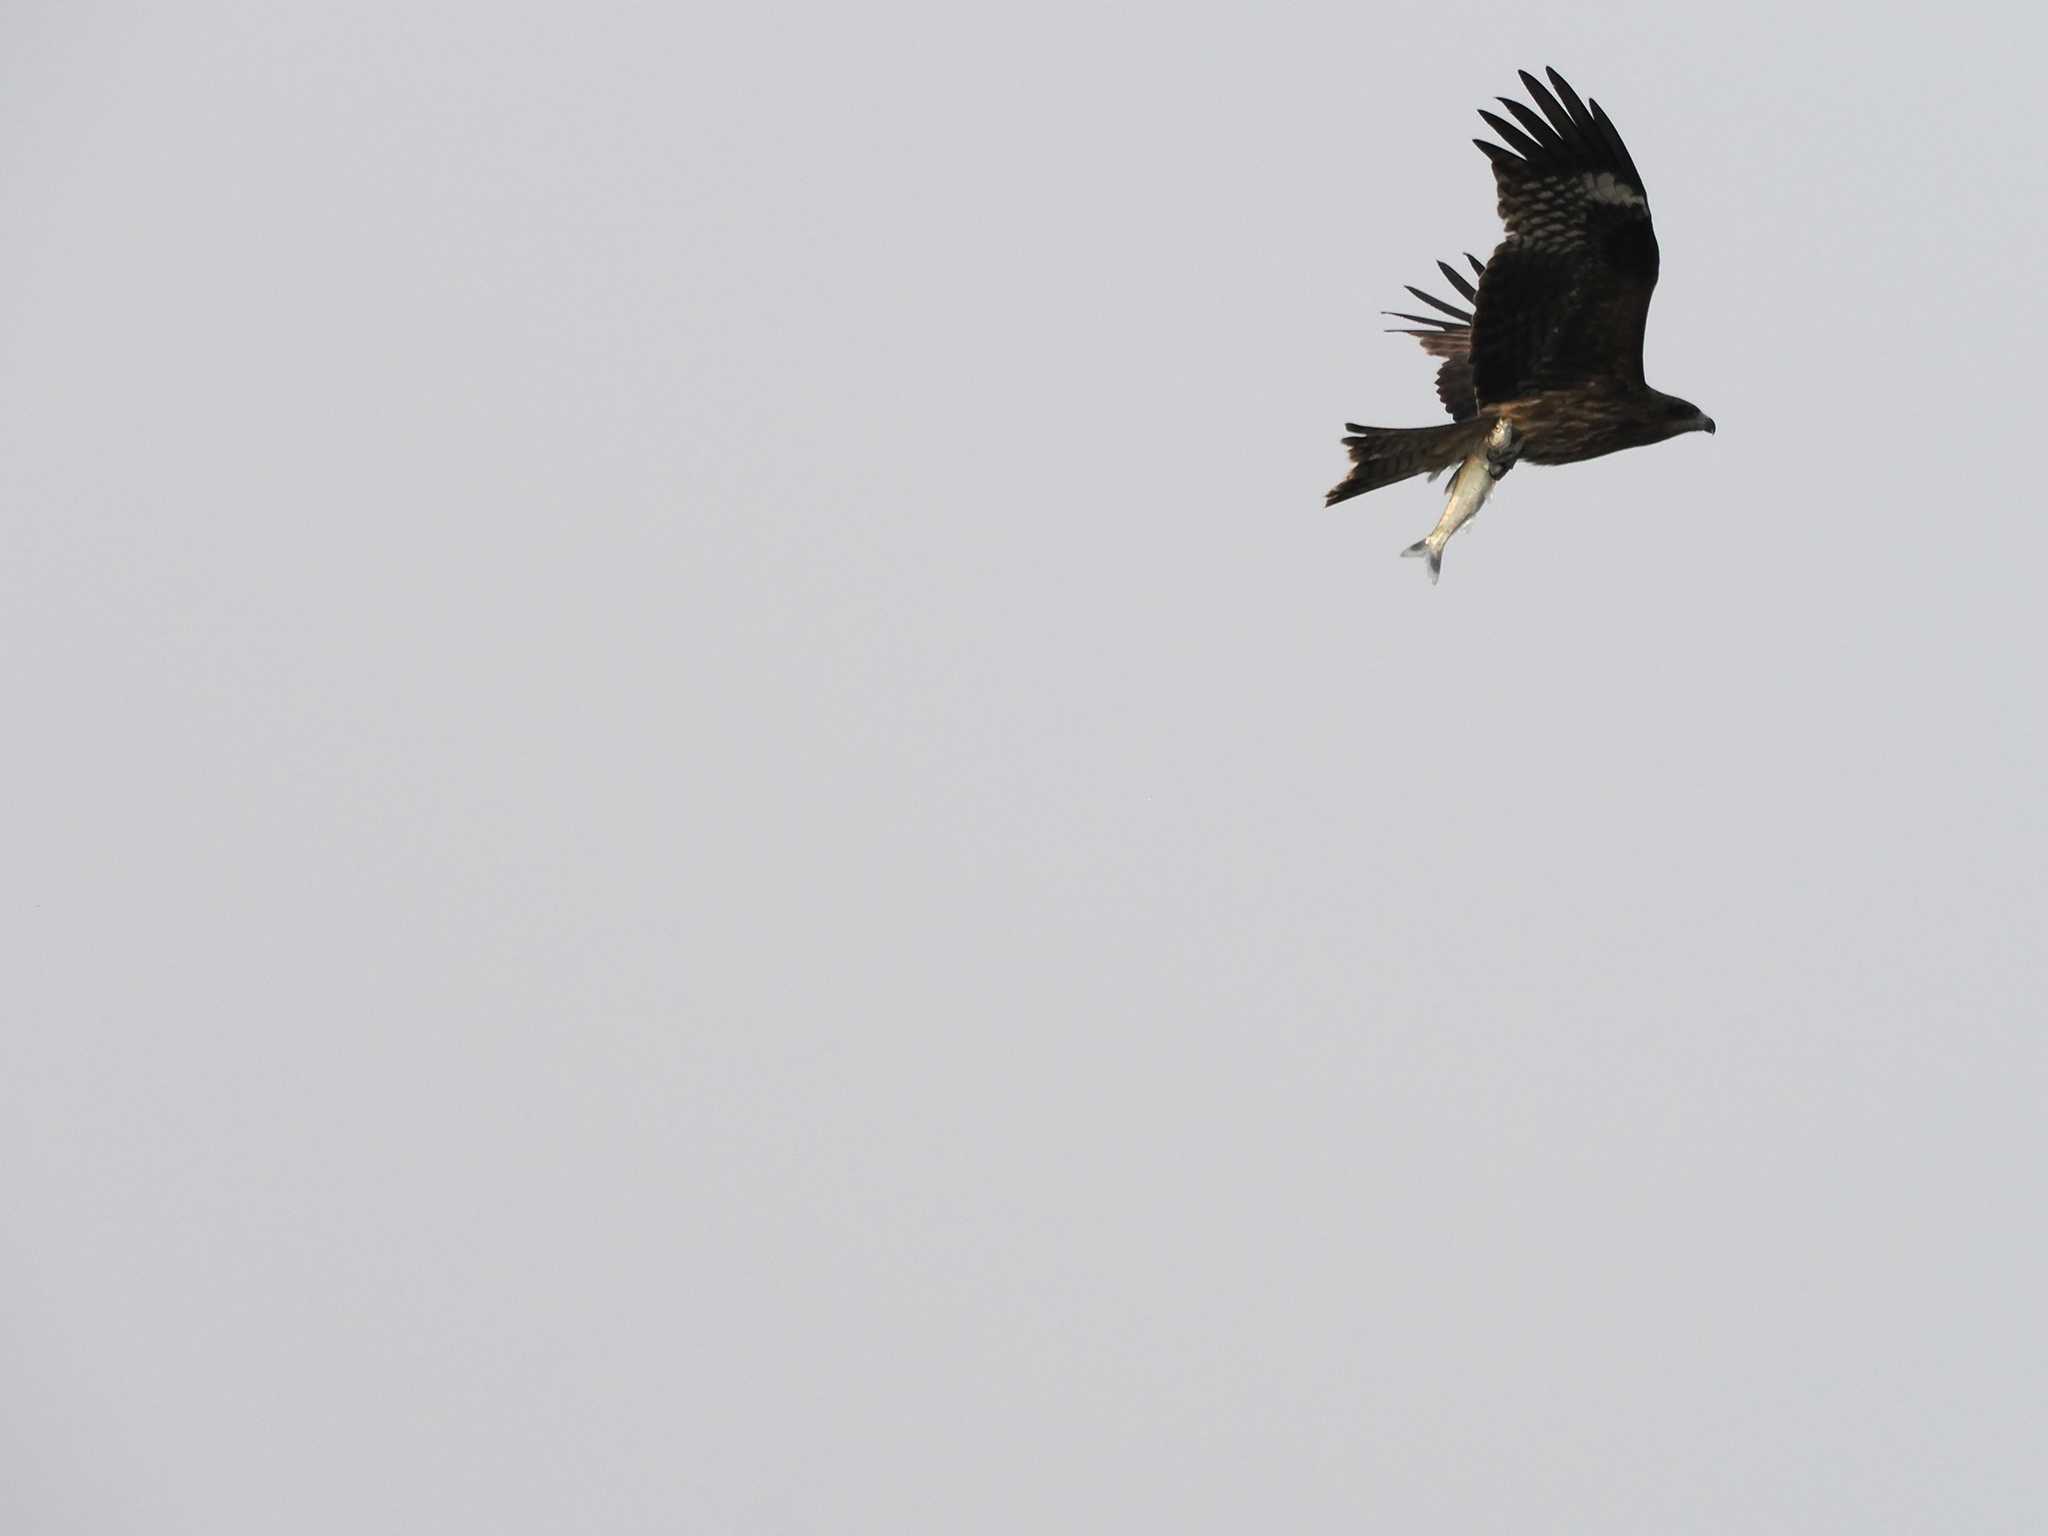 Photo of Black Kite at North Inba Swamp by アカウント11554